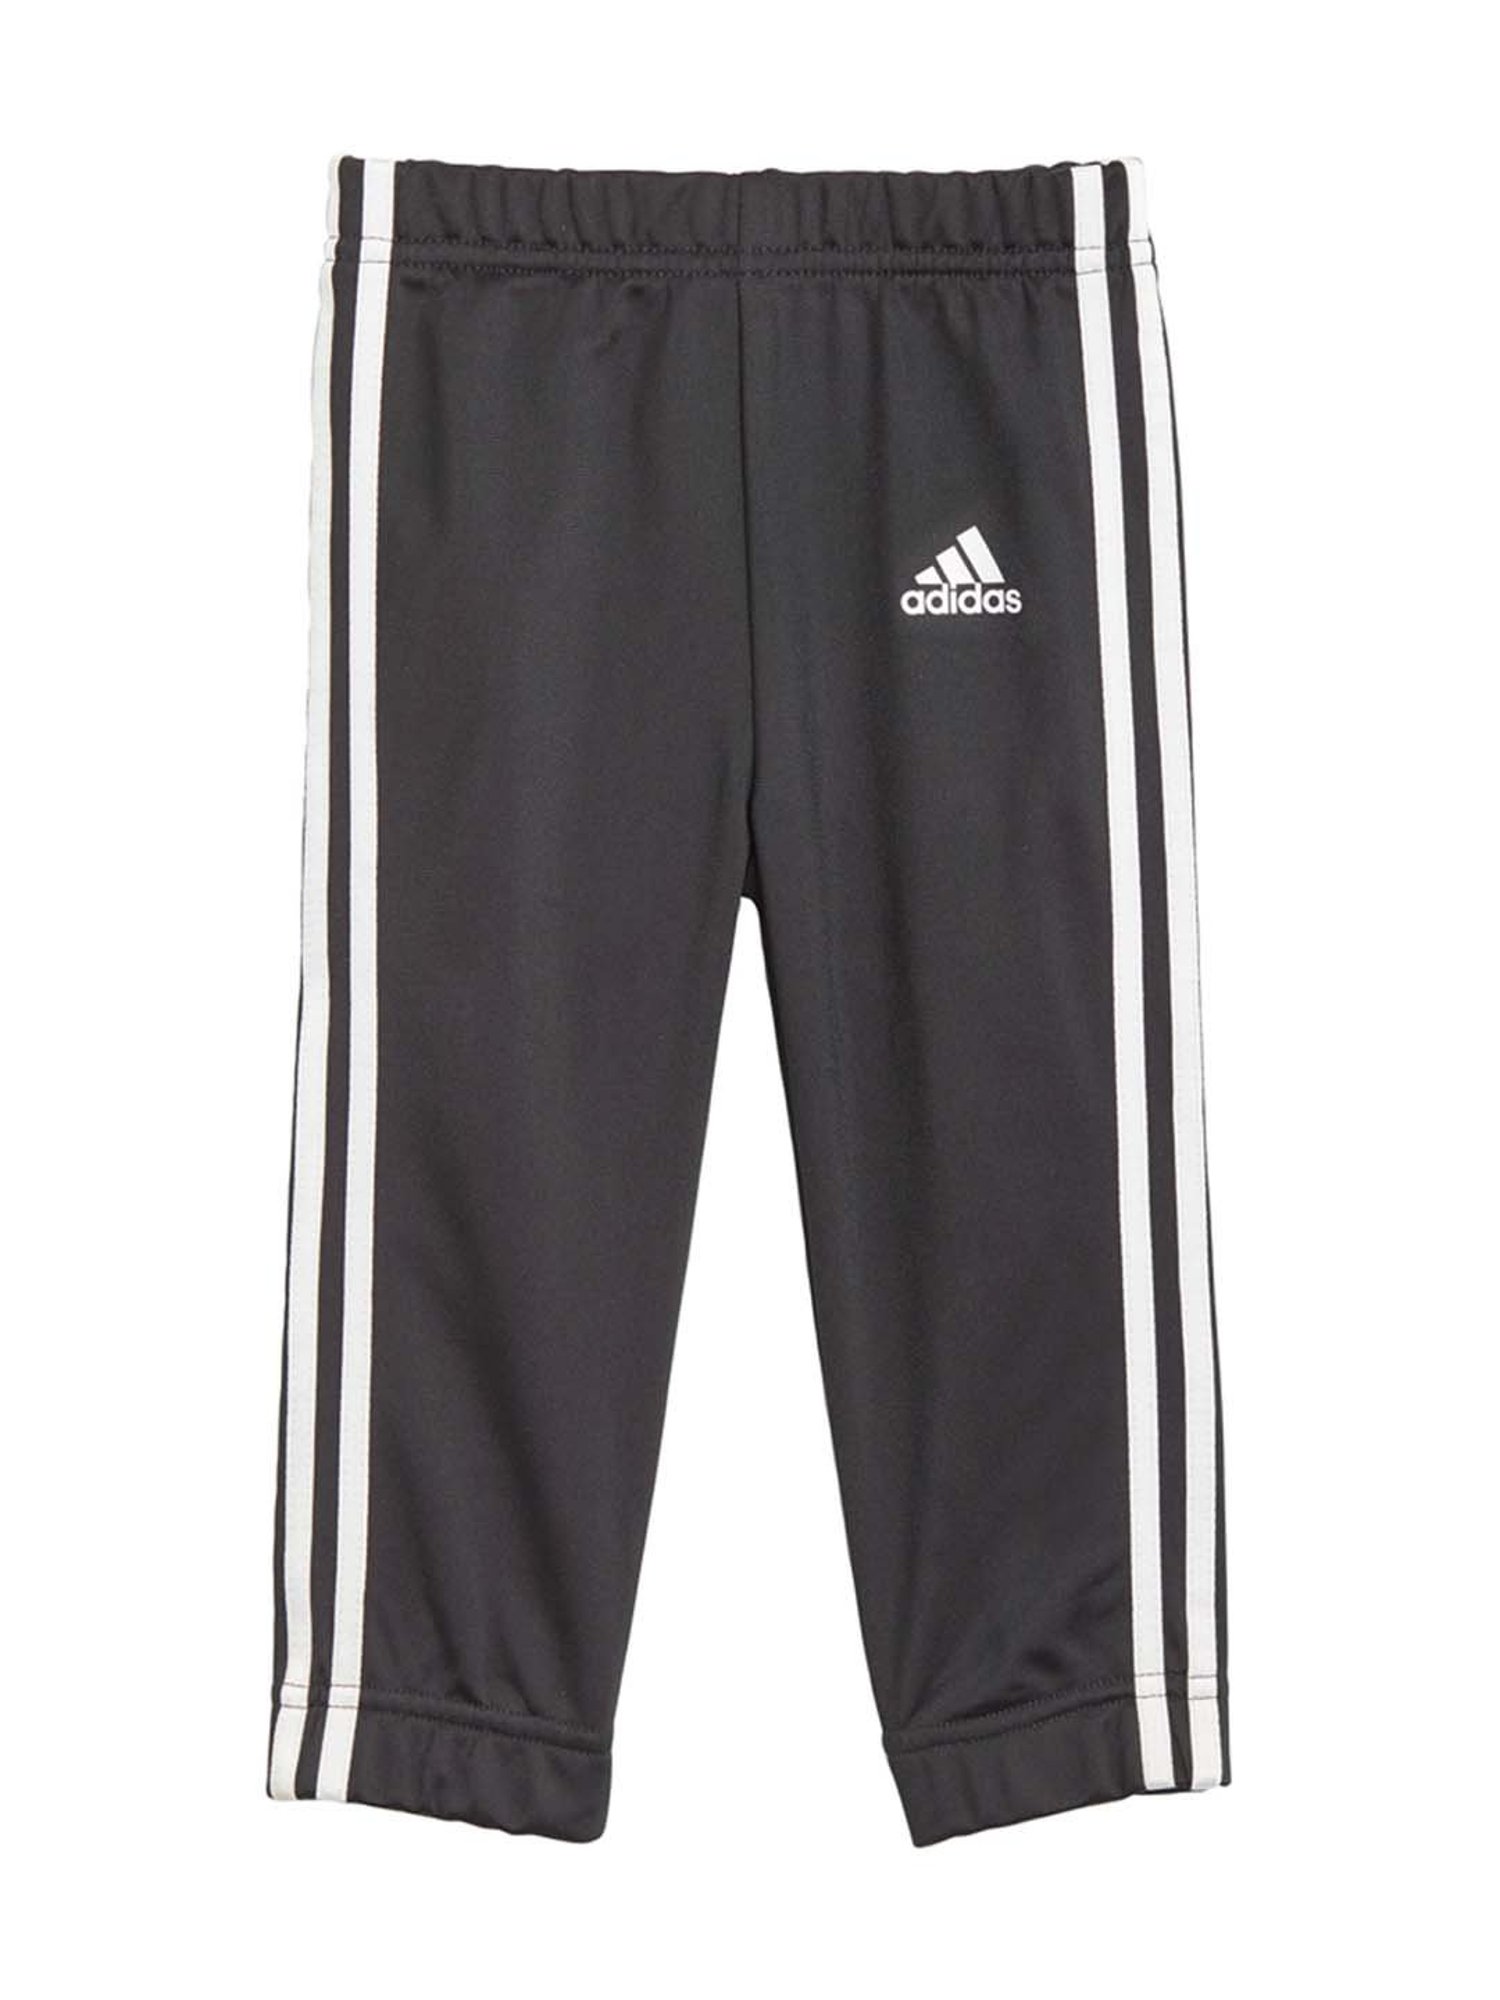 Buy Adidas Kids Black & White Striped Track Suits for Boys Clothing Online  @ Tata CLiQ